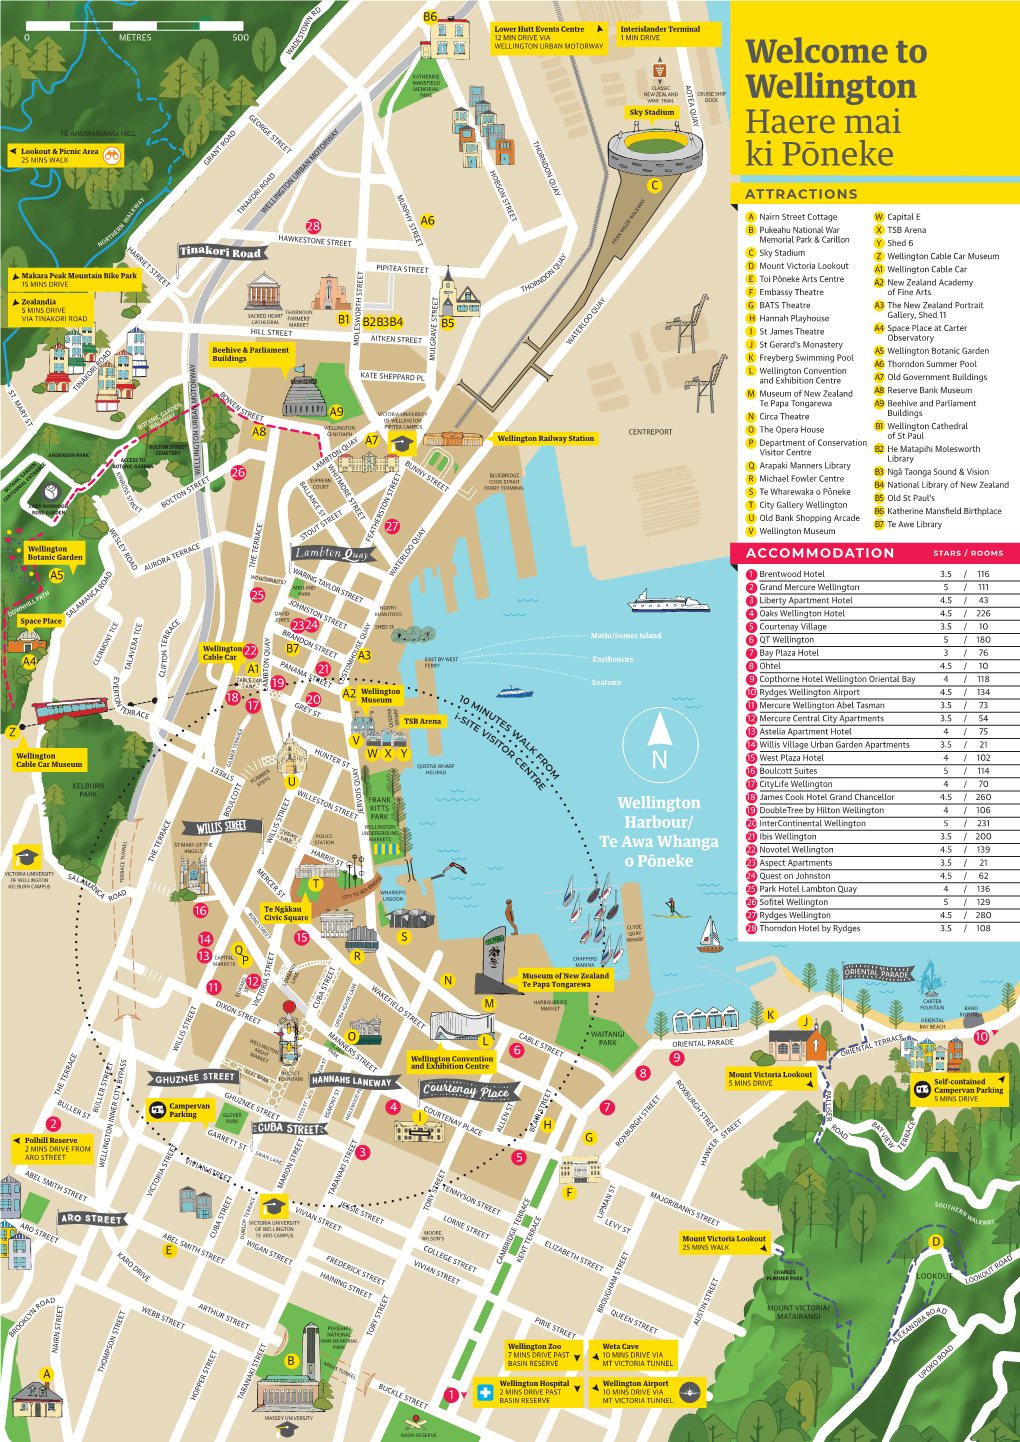 Download the Wellington Map PDF 3.6MB